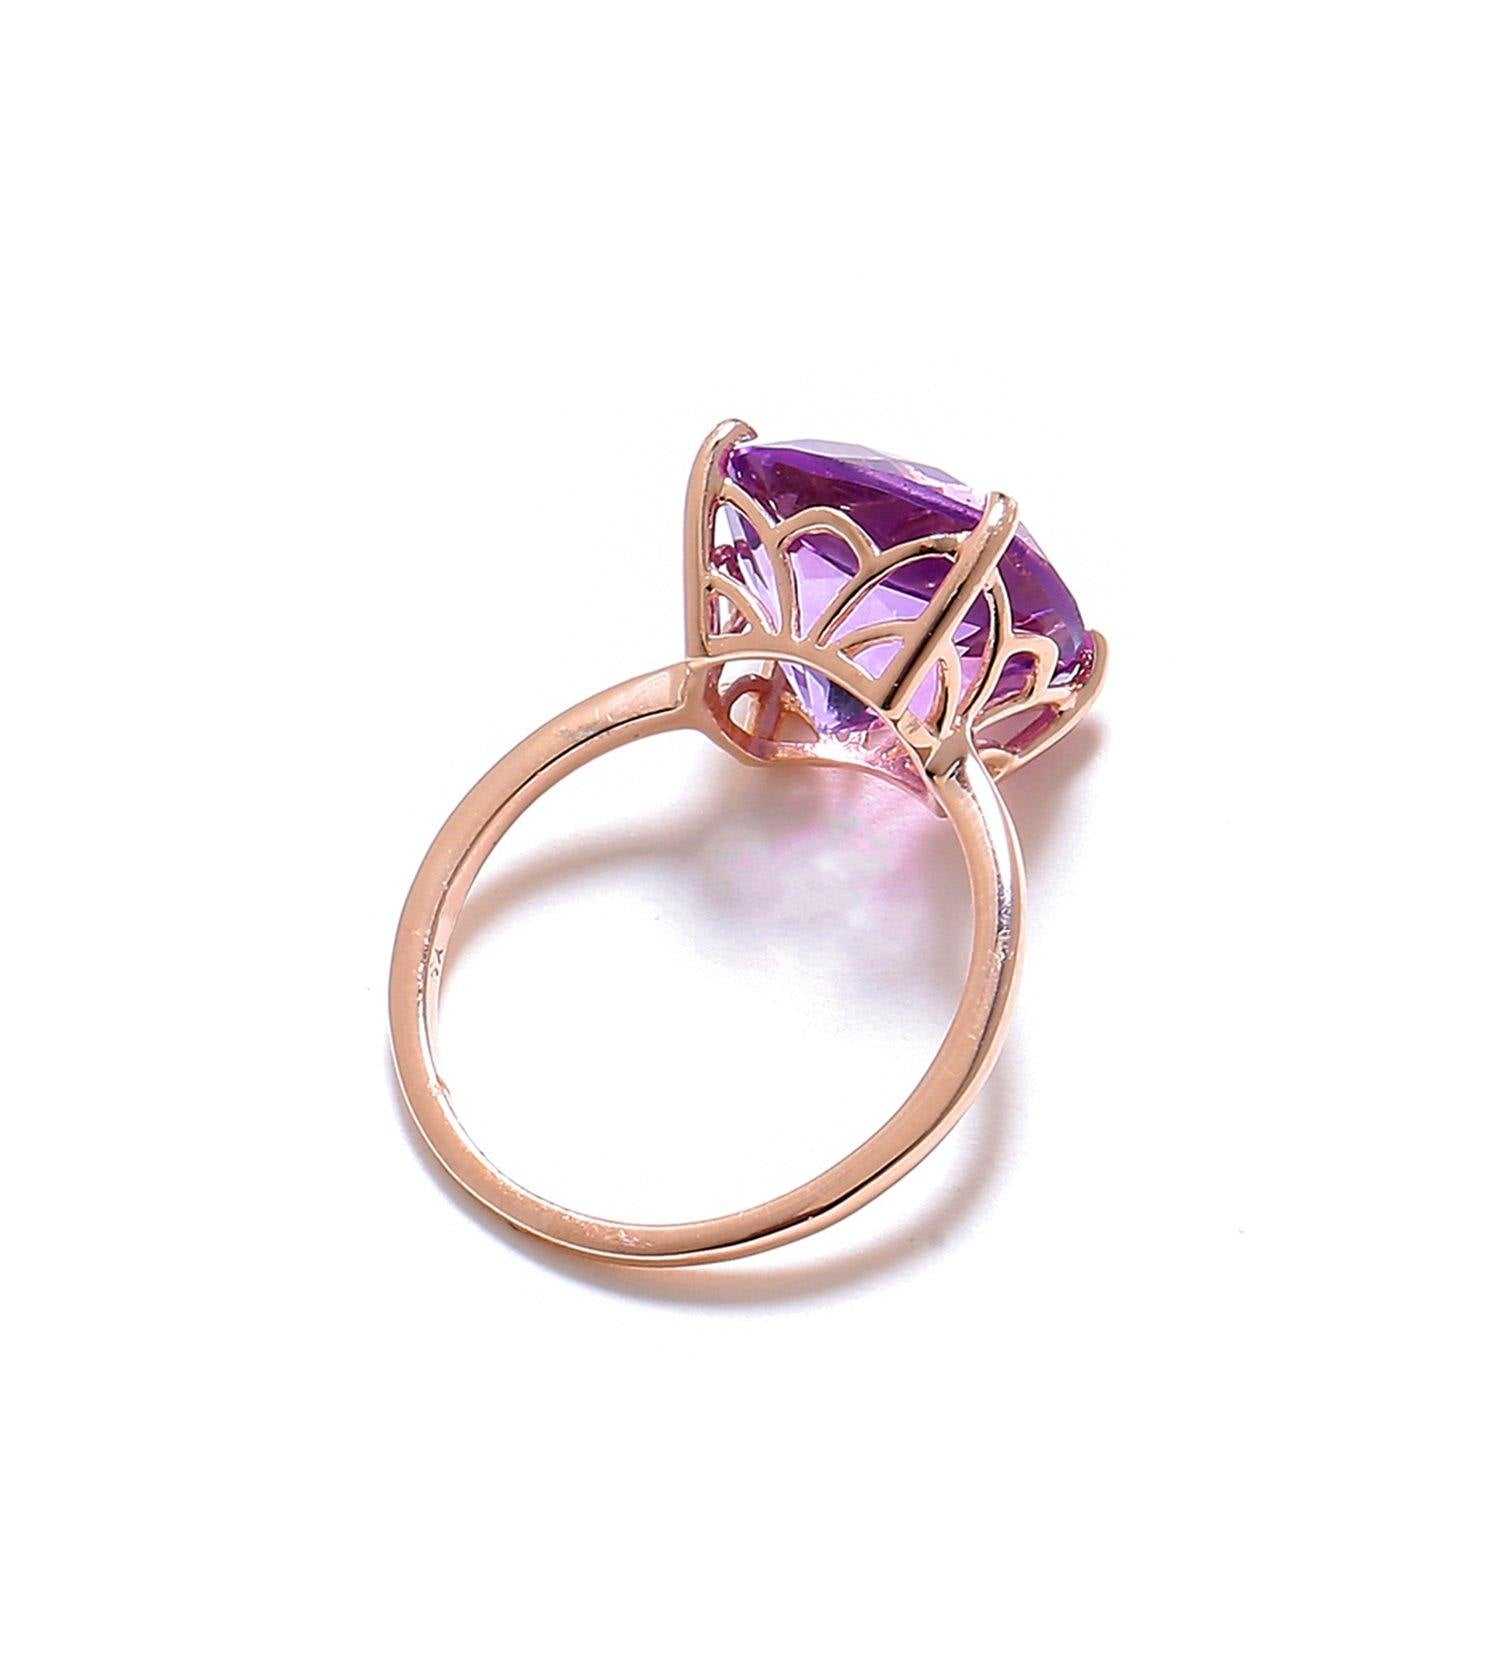 5.85 Ct Amethyst Solid 10k Rose Gold Ring Jewelry - YoTreasure